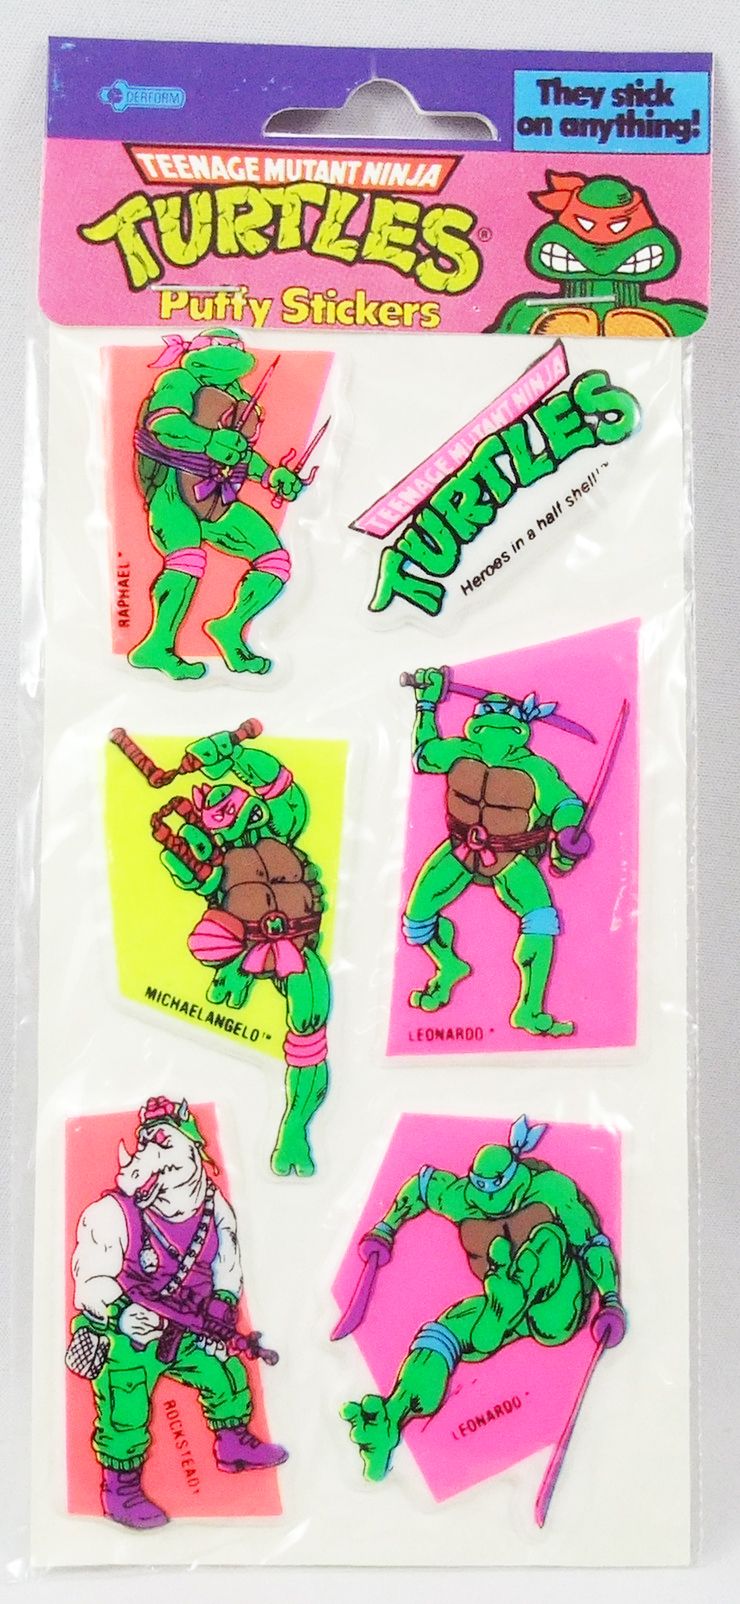 Teenage Mutant Ninja Turtles - Puffy Stickers pack - Derform 1988